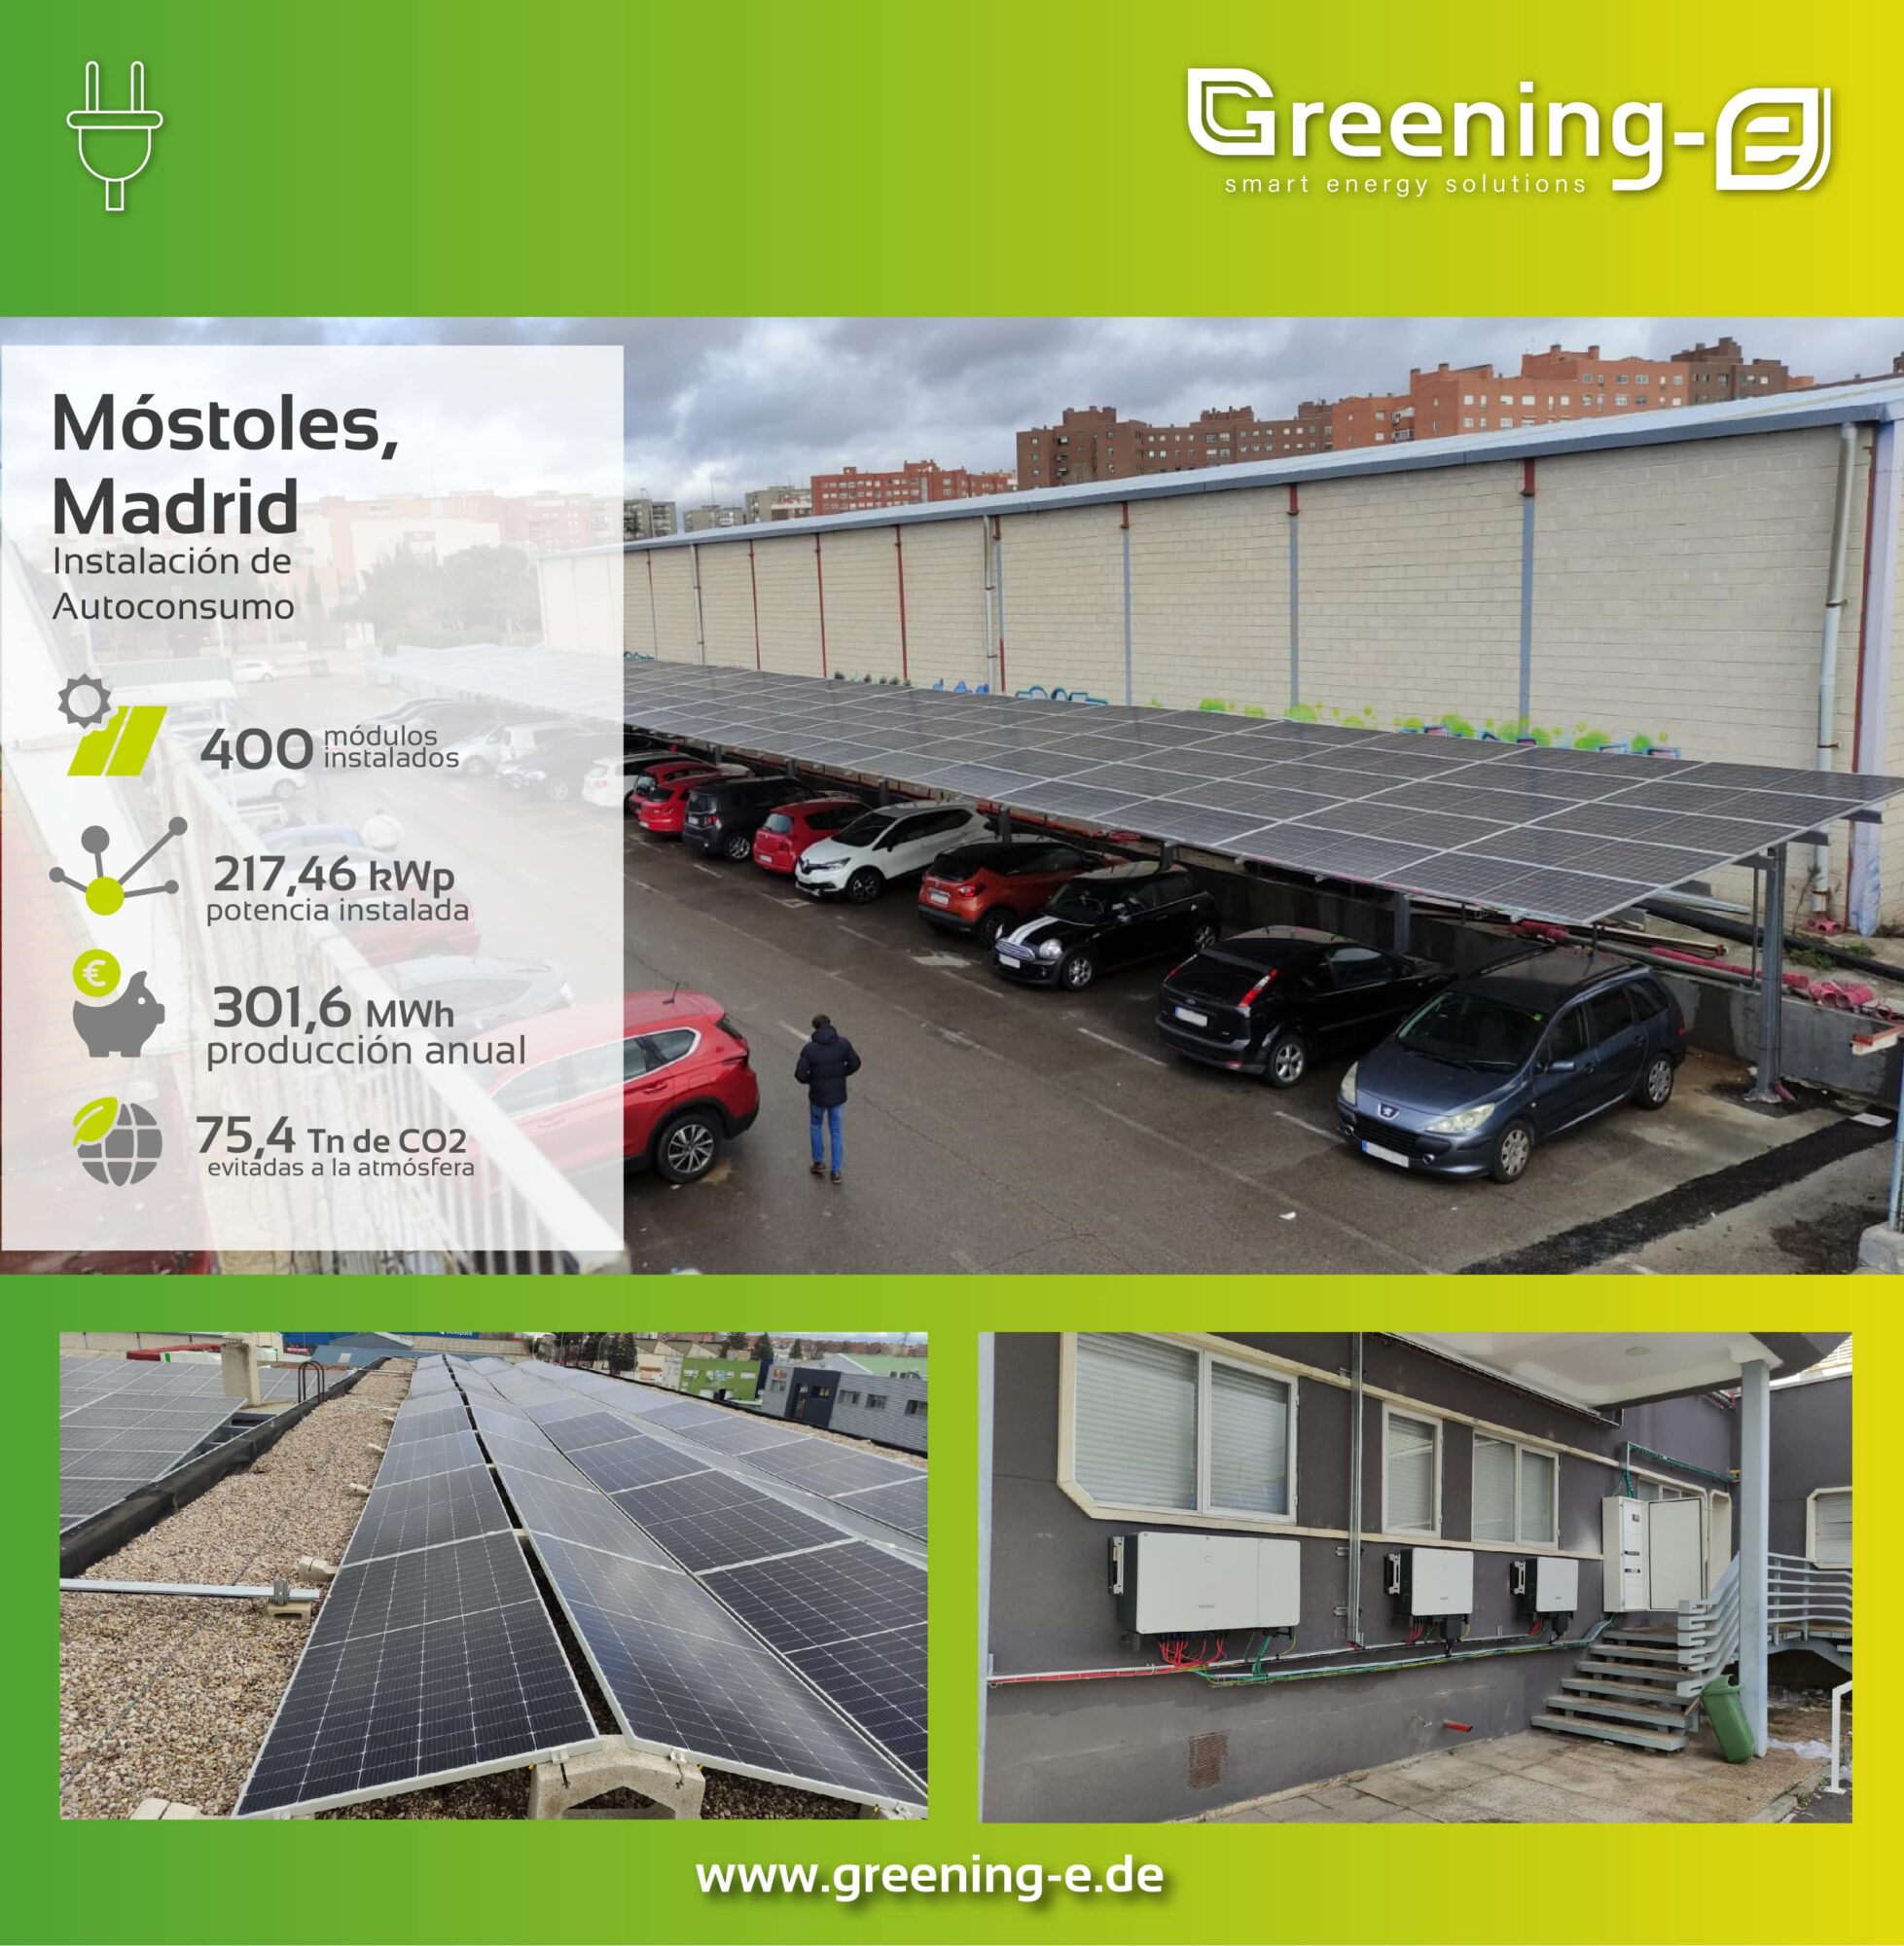 Proyecto Greening-e